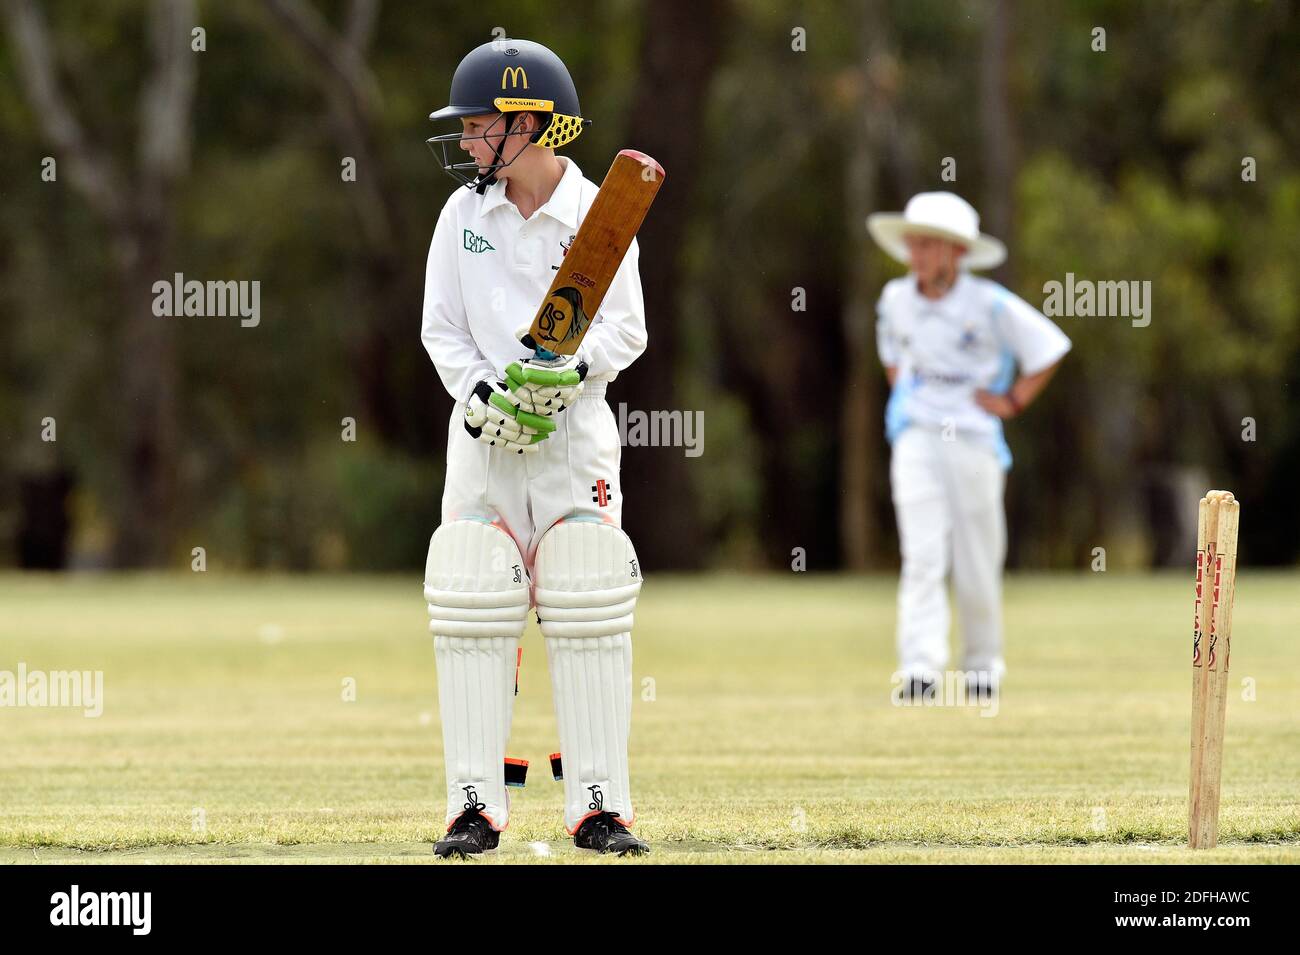 The Benalla Bushrangers under 12s take on the Wangaratta Colts in Benalla. Australia Stock Photo